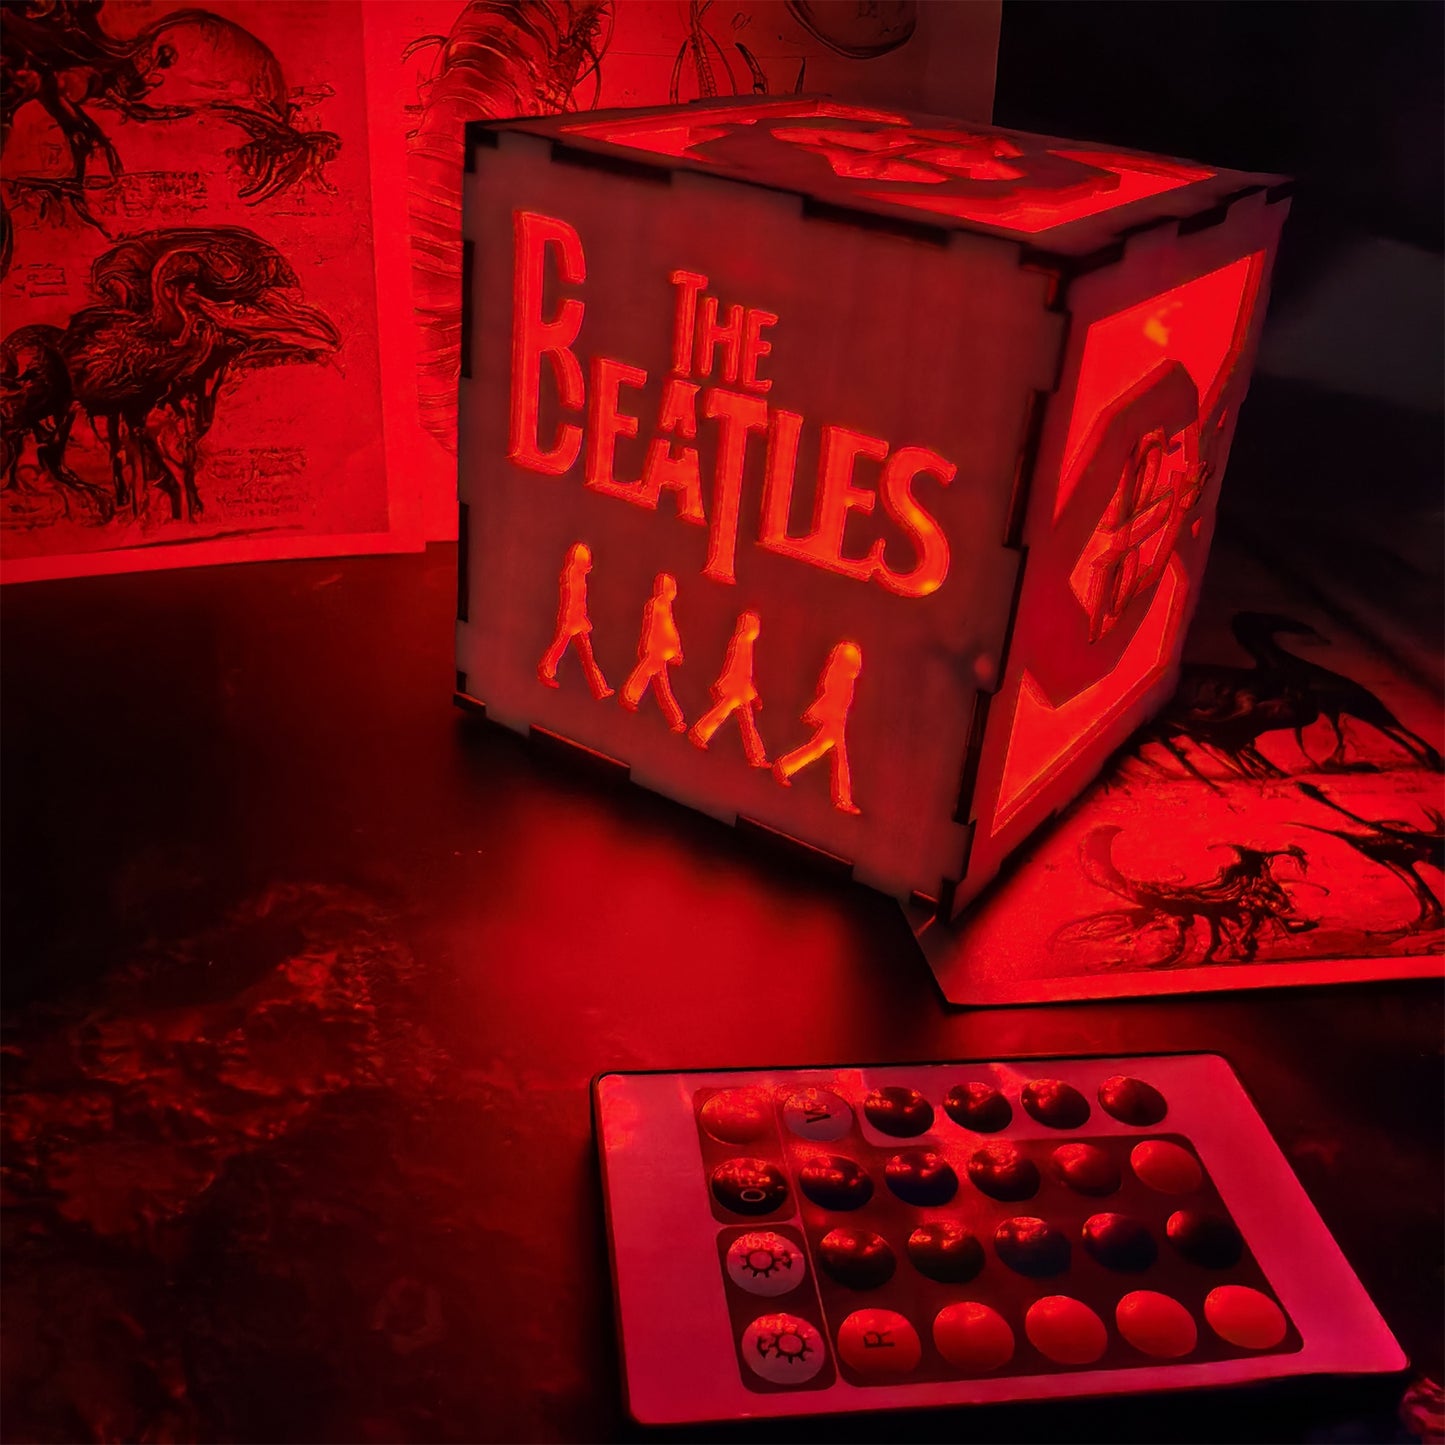 The Beatles Inspired Night Light Room Decor